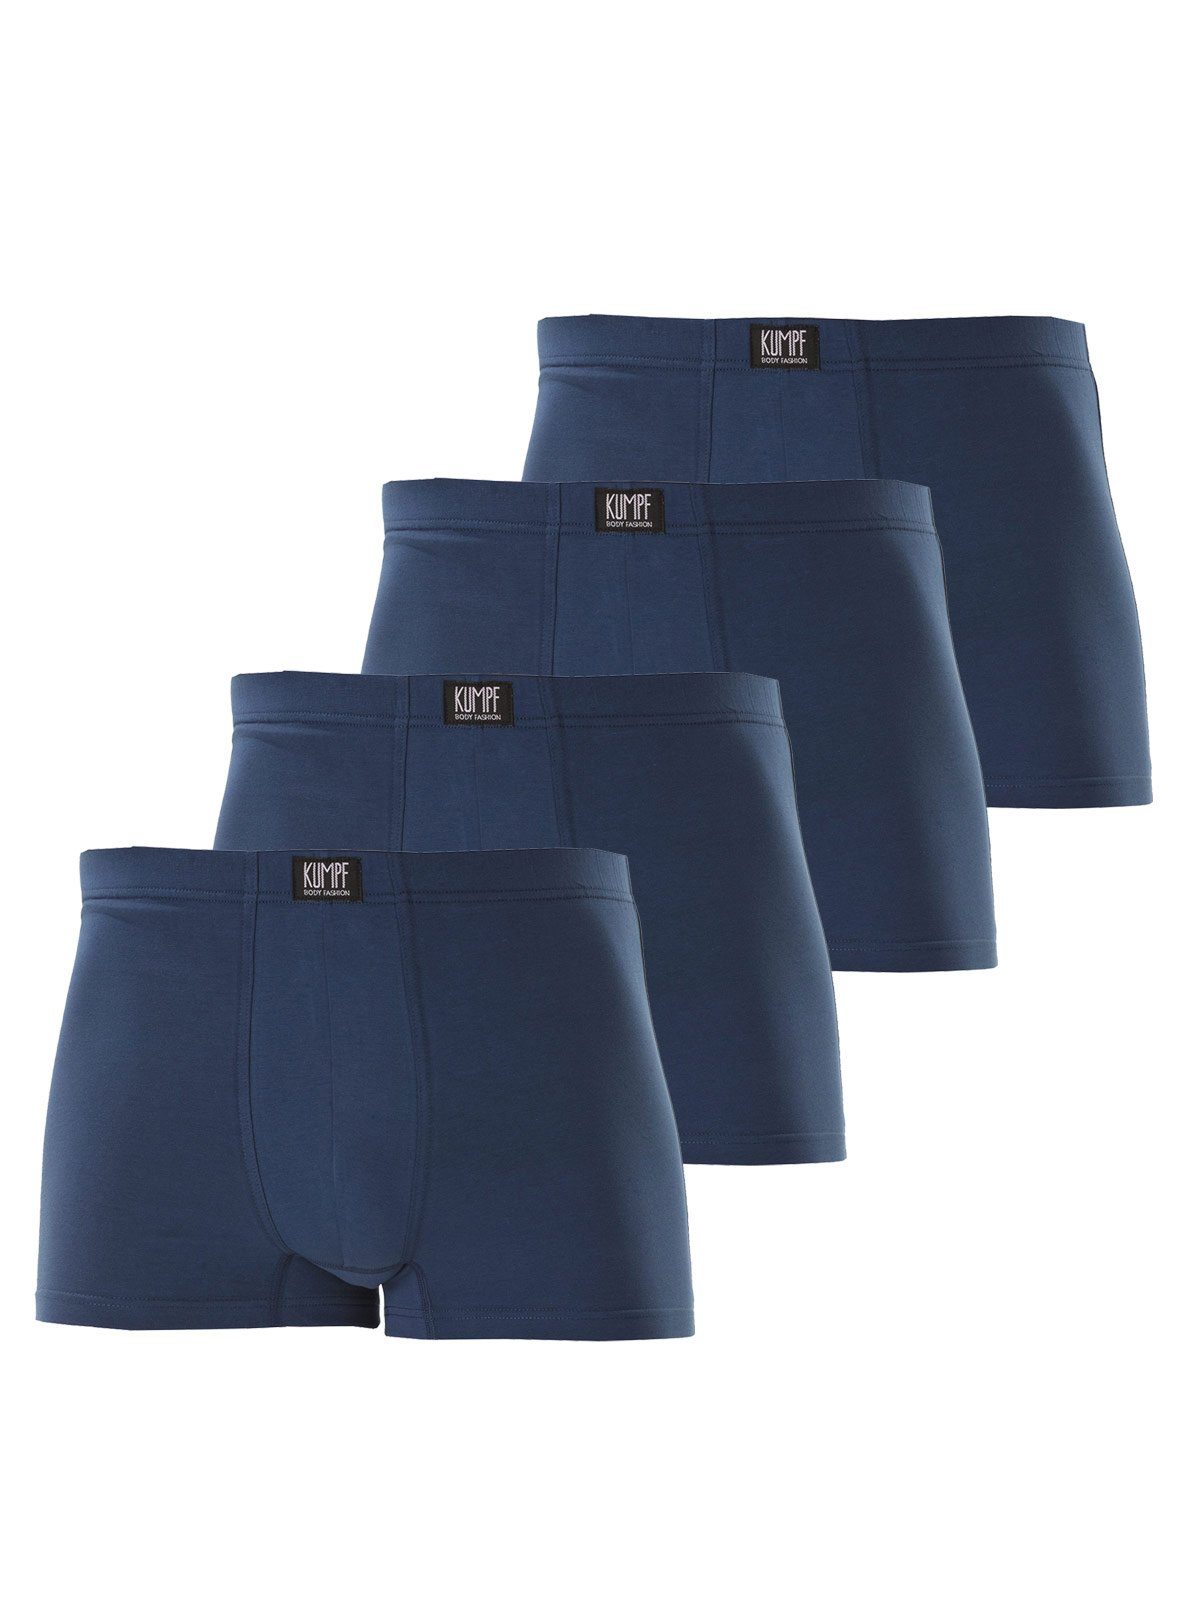 KUMPF Retro Pants 4er Sparpack Herren Pants Bio Cotton (Spar-Set, 4-St) hohe Markenqualität darkblue